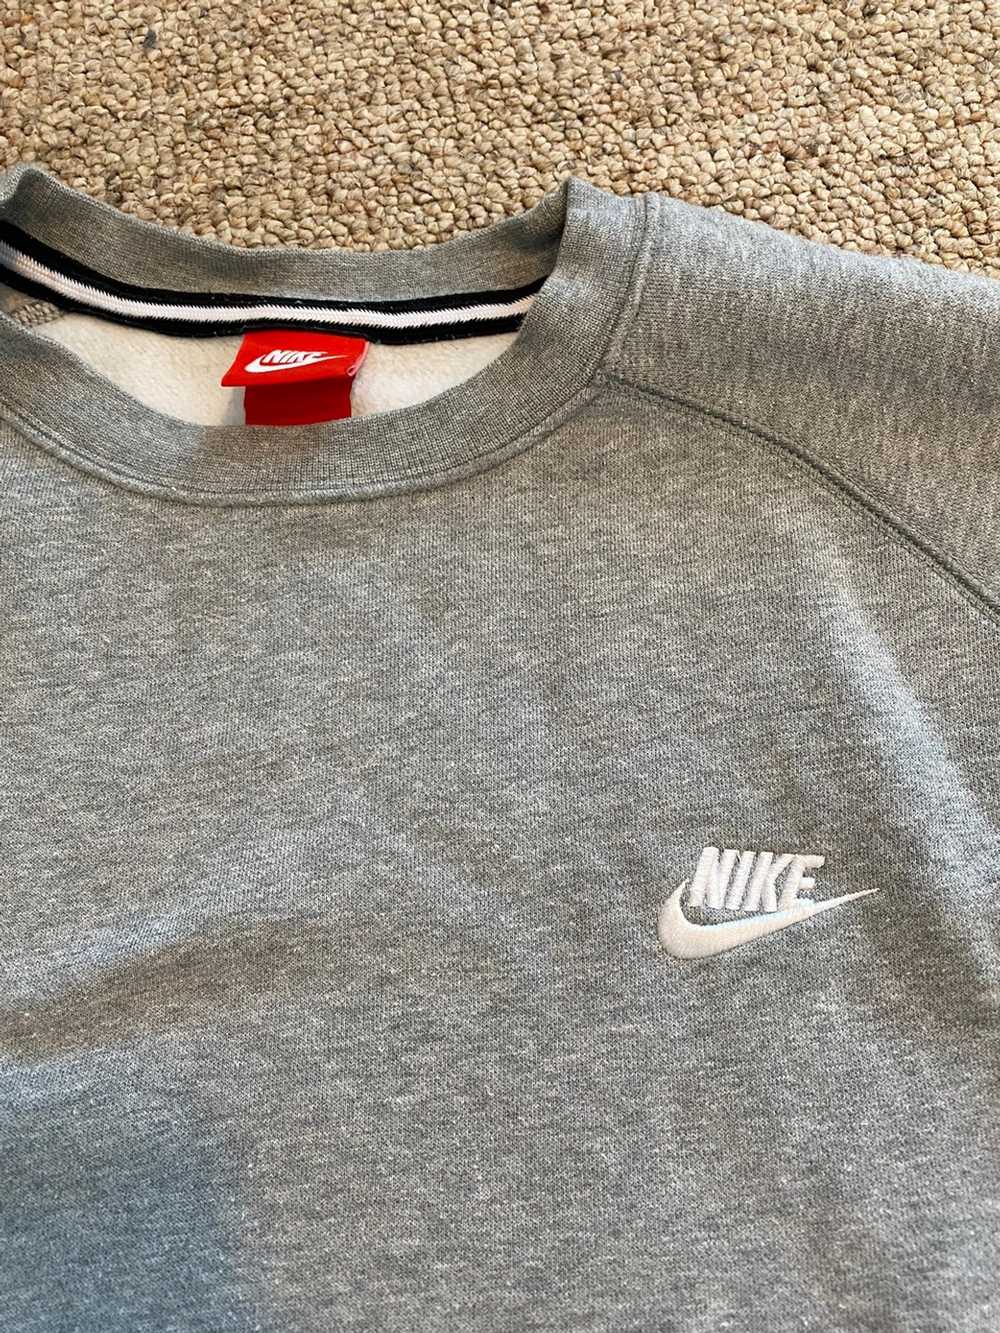 Nike Nike Crewneck Sweater - image 2